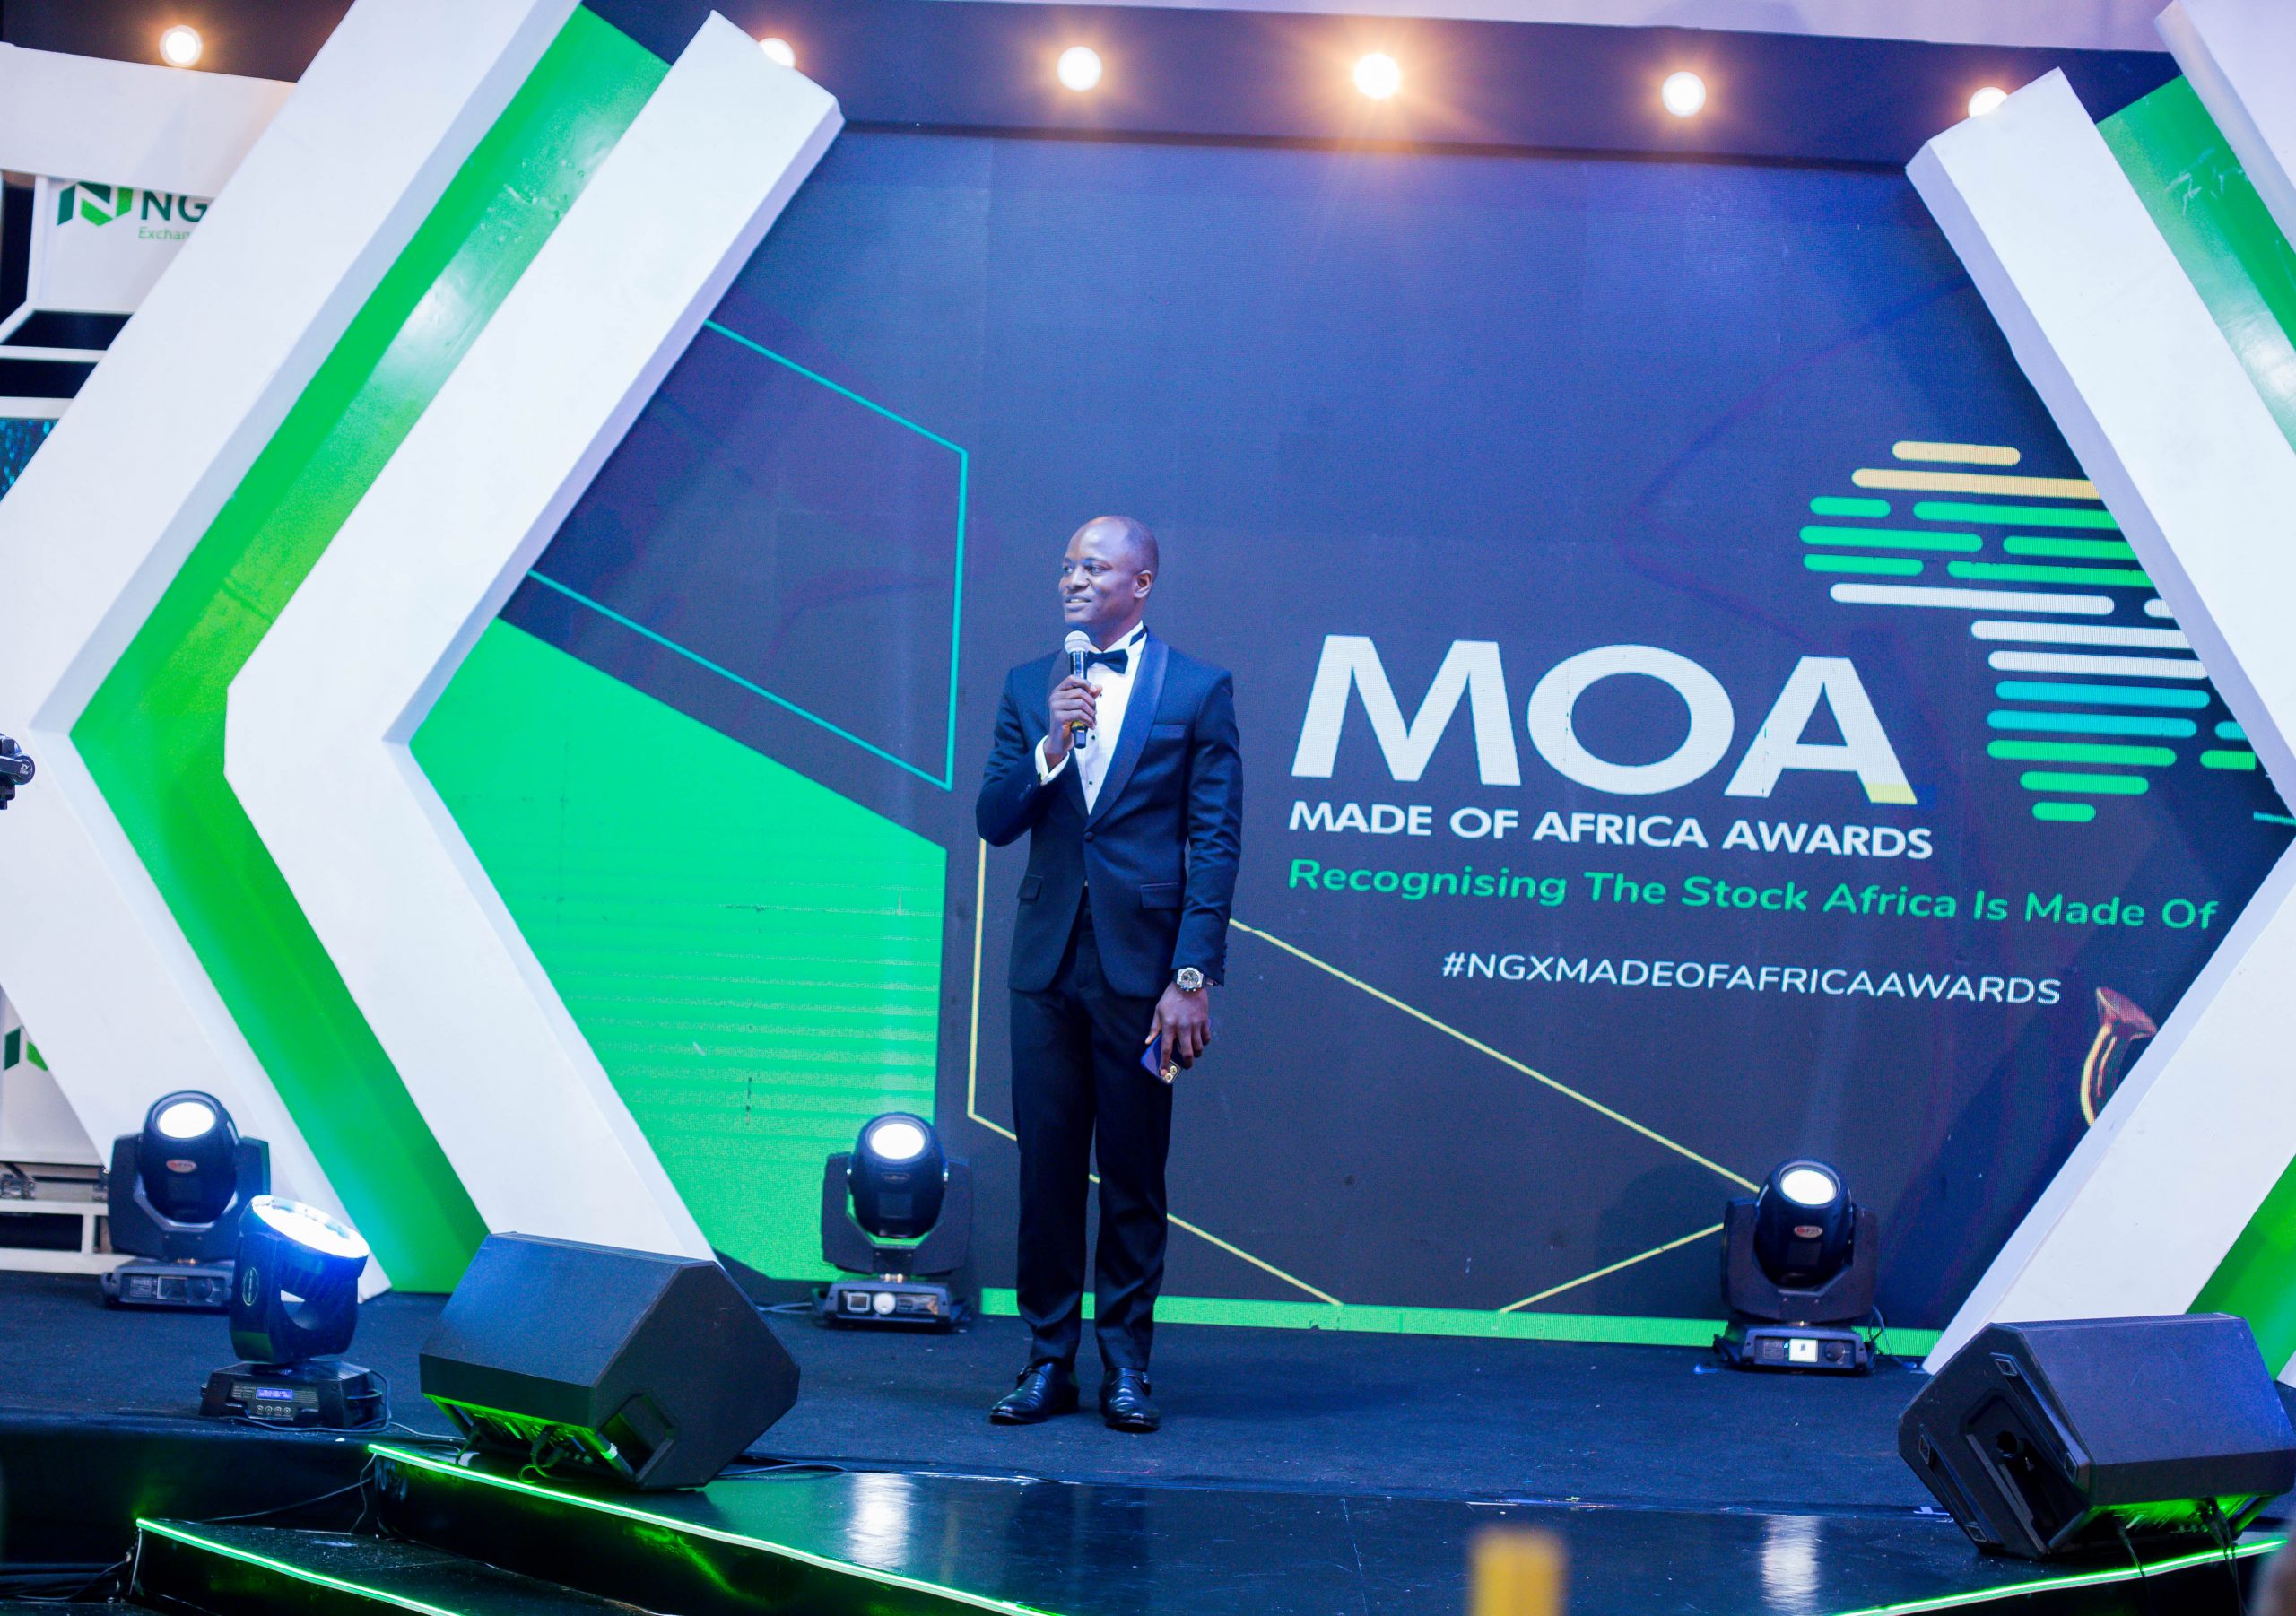 NGX Made of Africa Awards 2022